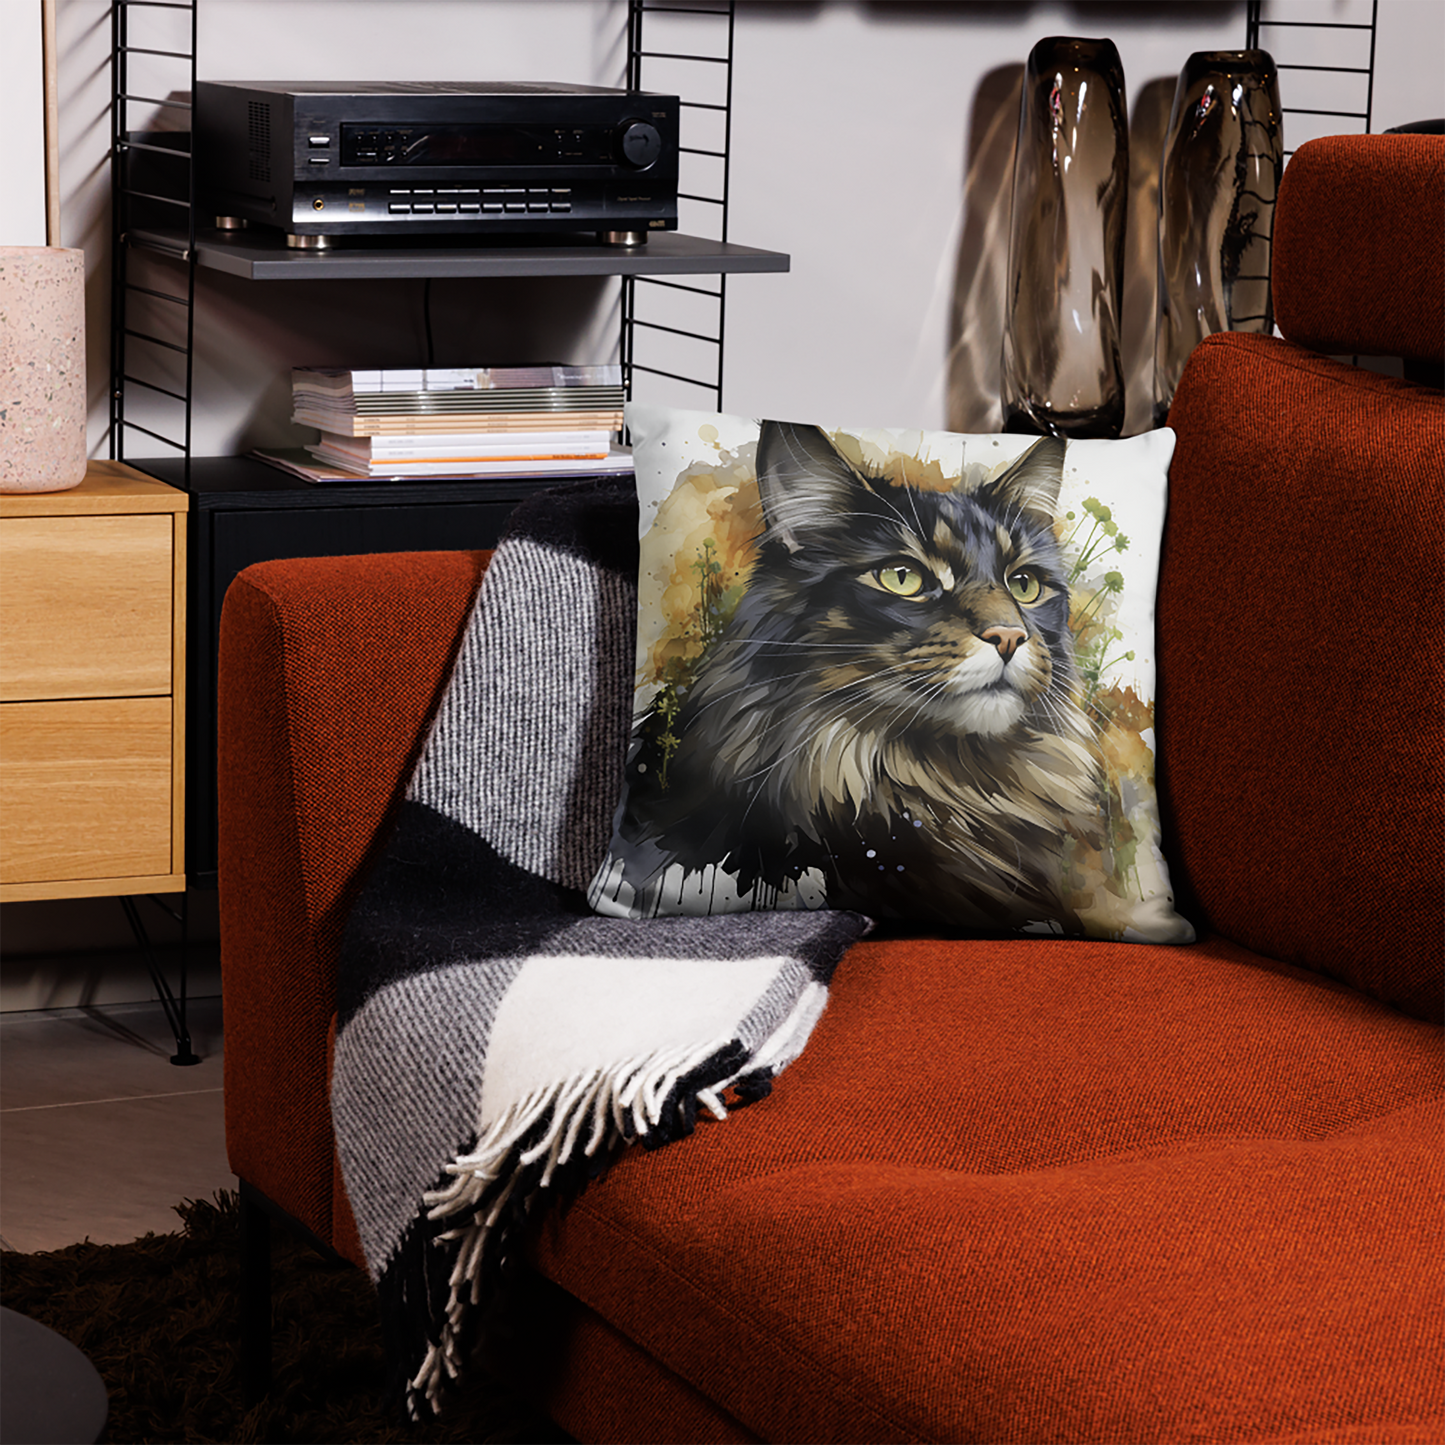 Cat Throw Pillow Majestic Feline Gaze Watercolor Portrait Polyester Decorative Cushion 18x18